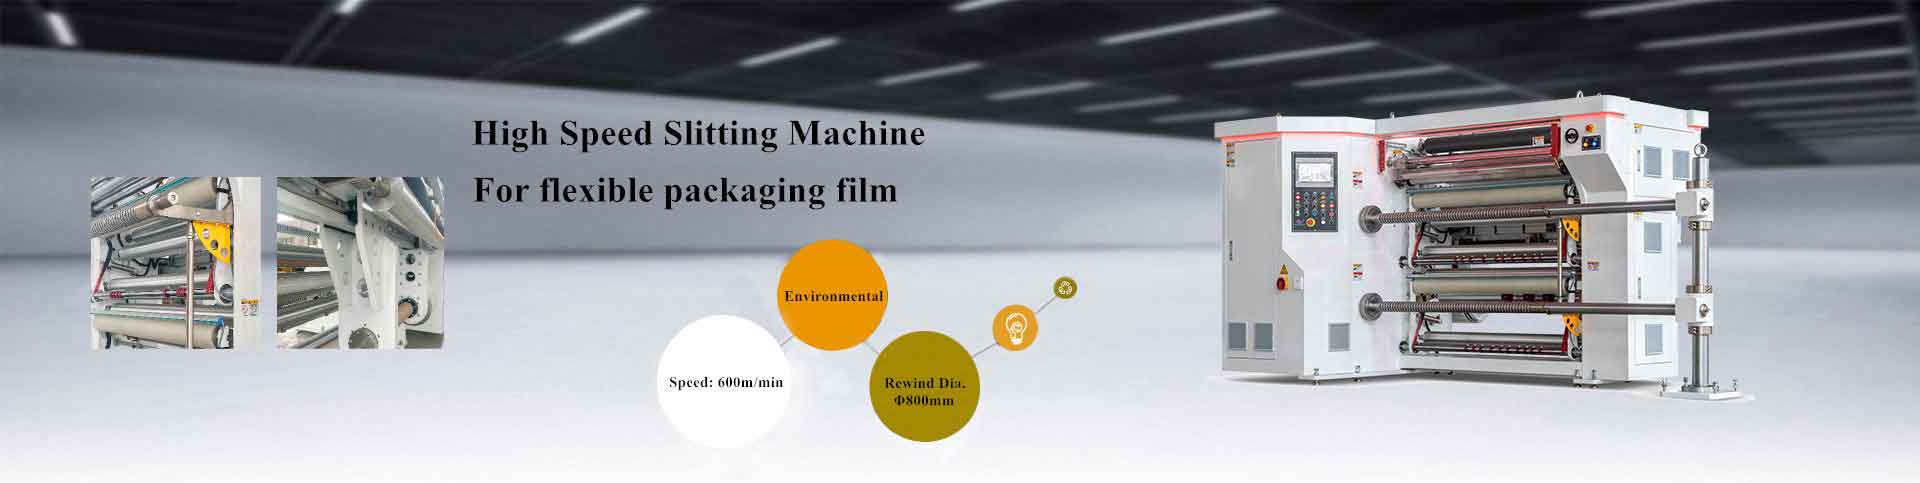 high speed slitting machine for flexible packaging film